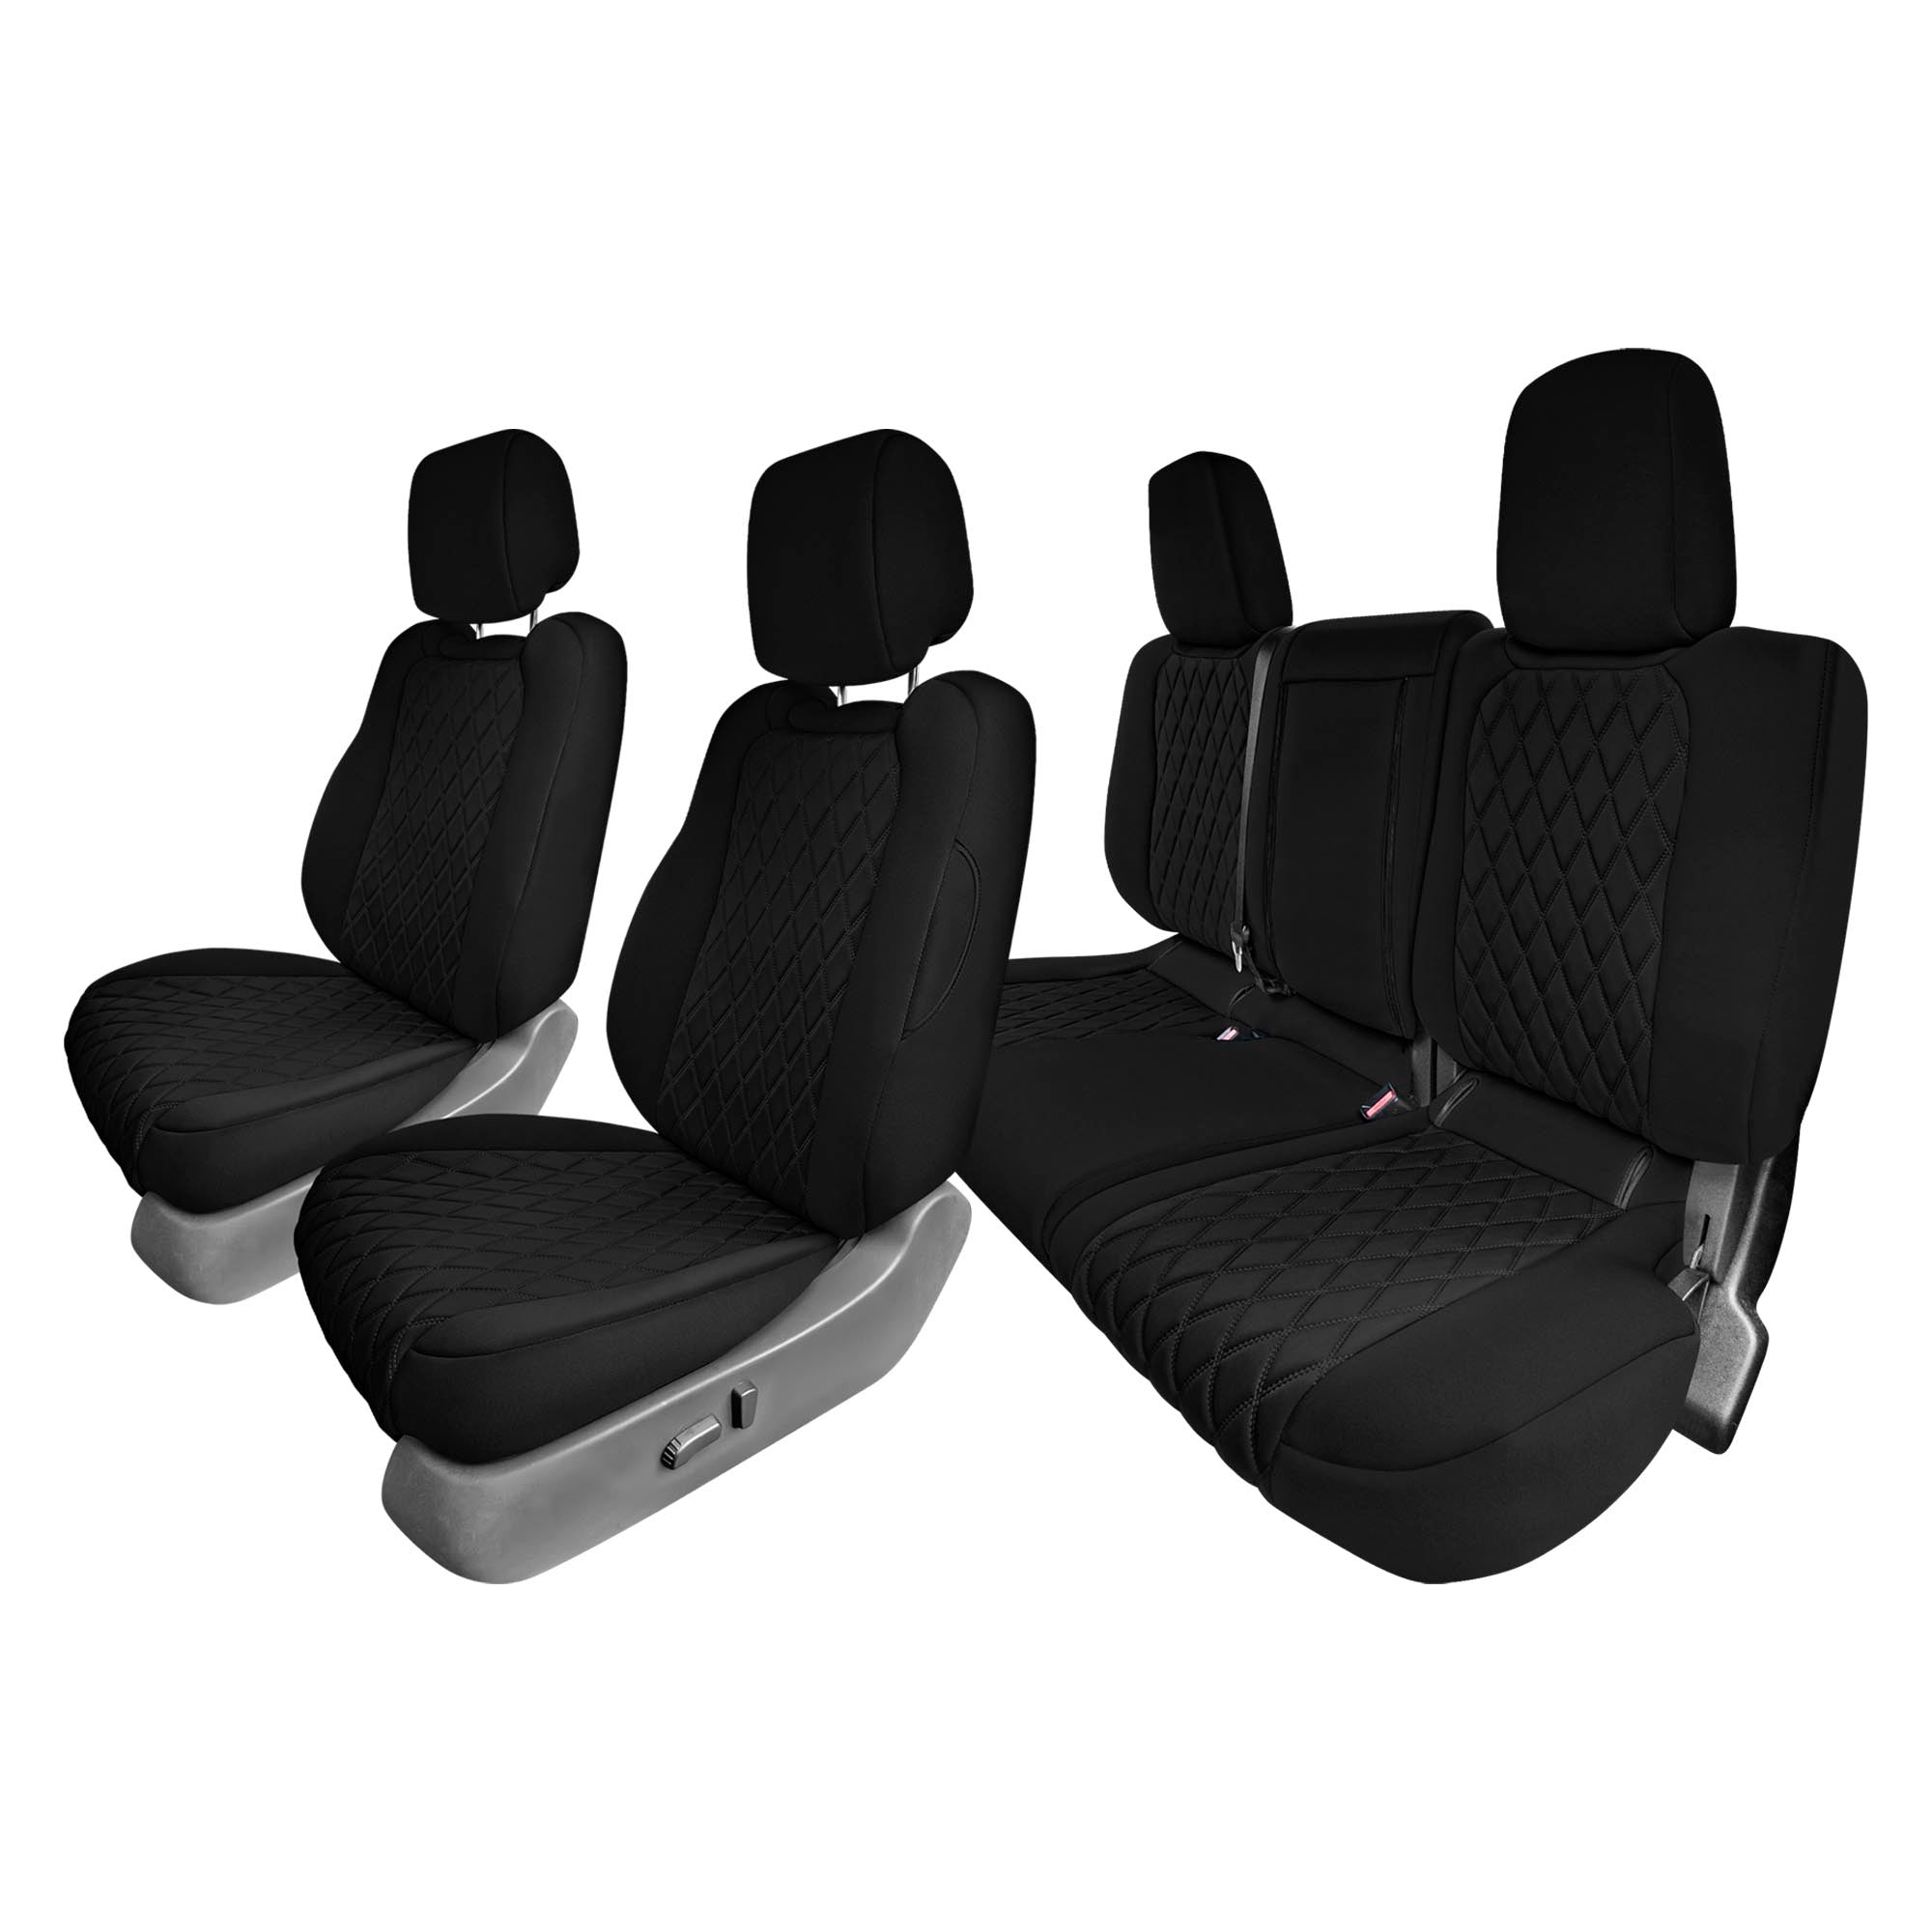 Nissan Titan King Cab/Crew Cab - 2017-2022 - Full Set Seat Covers - Black Ultraflex Neoprene